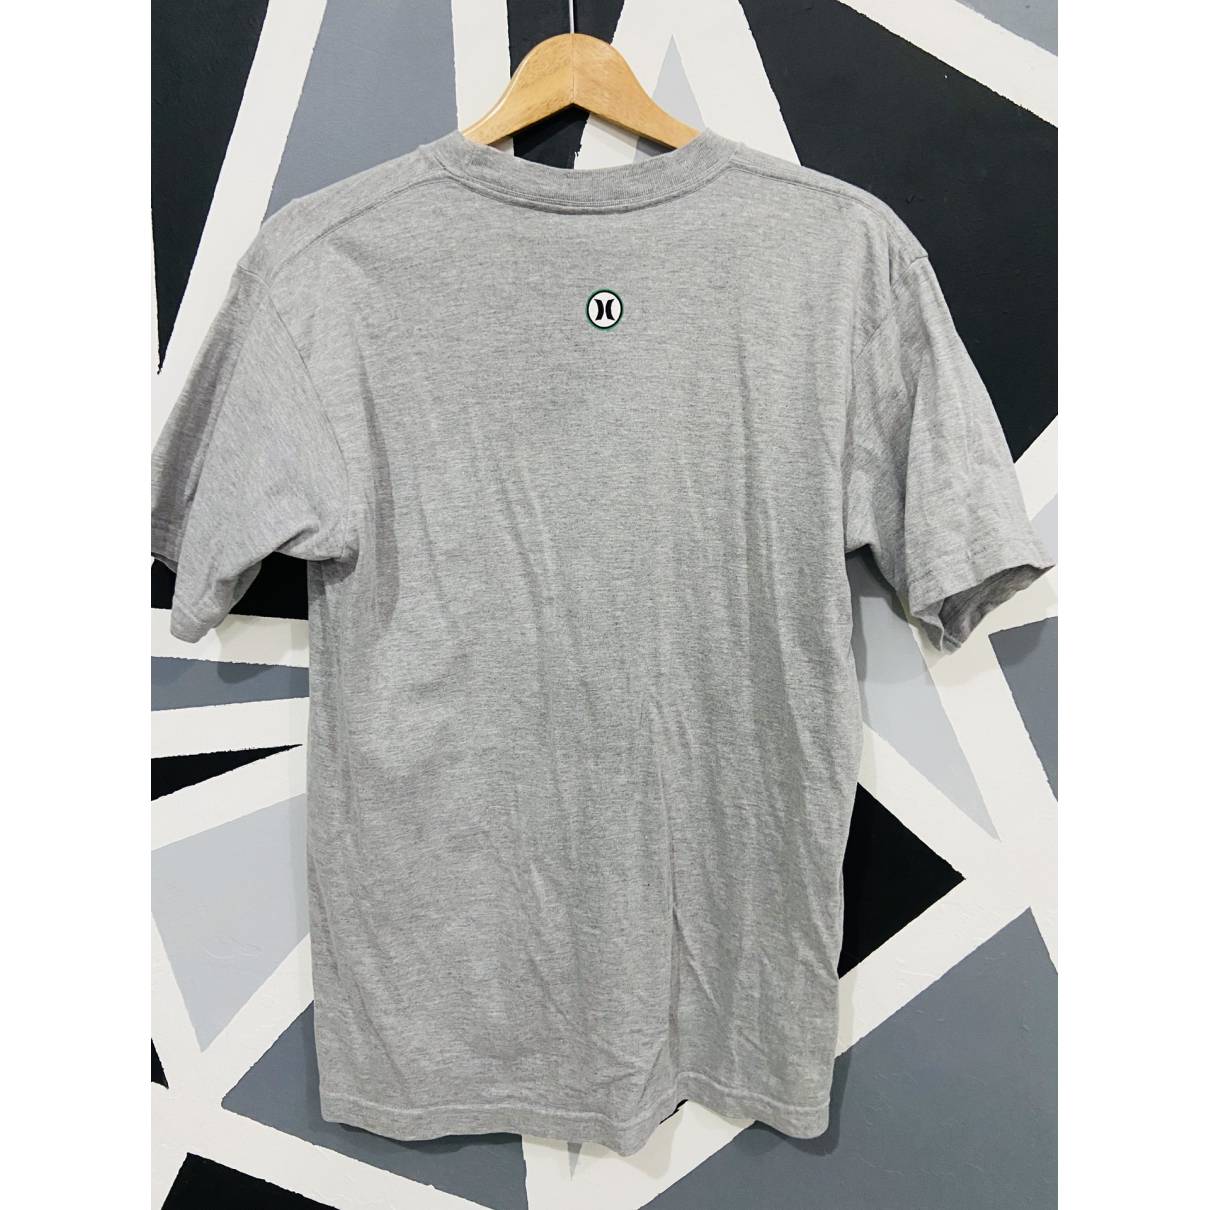 Buy Hurley T-shirt online - Vintage